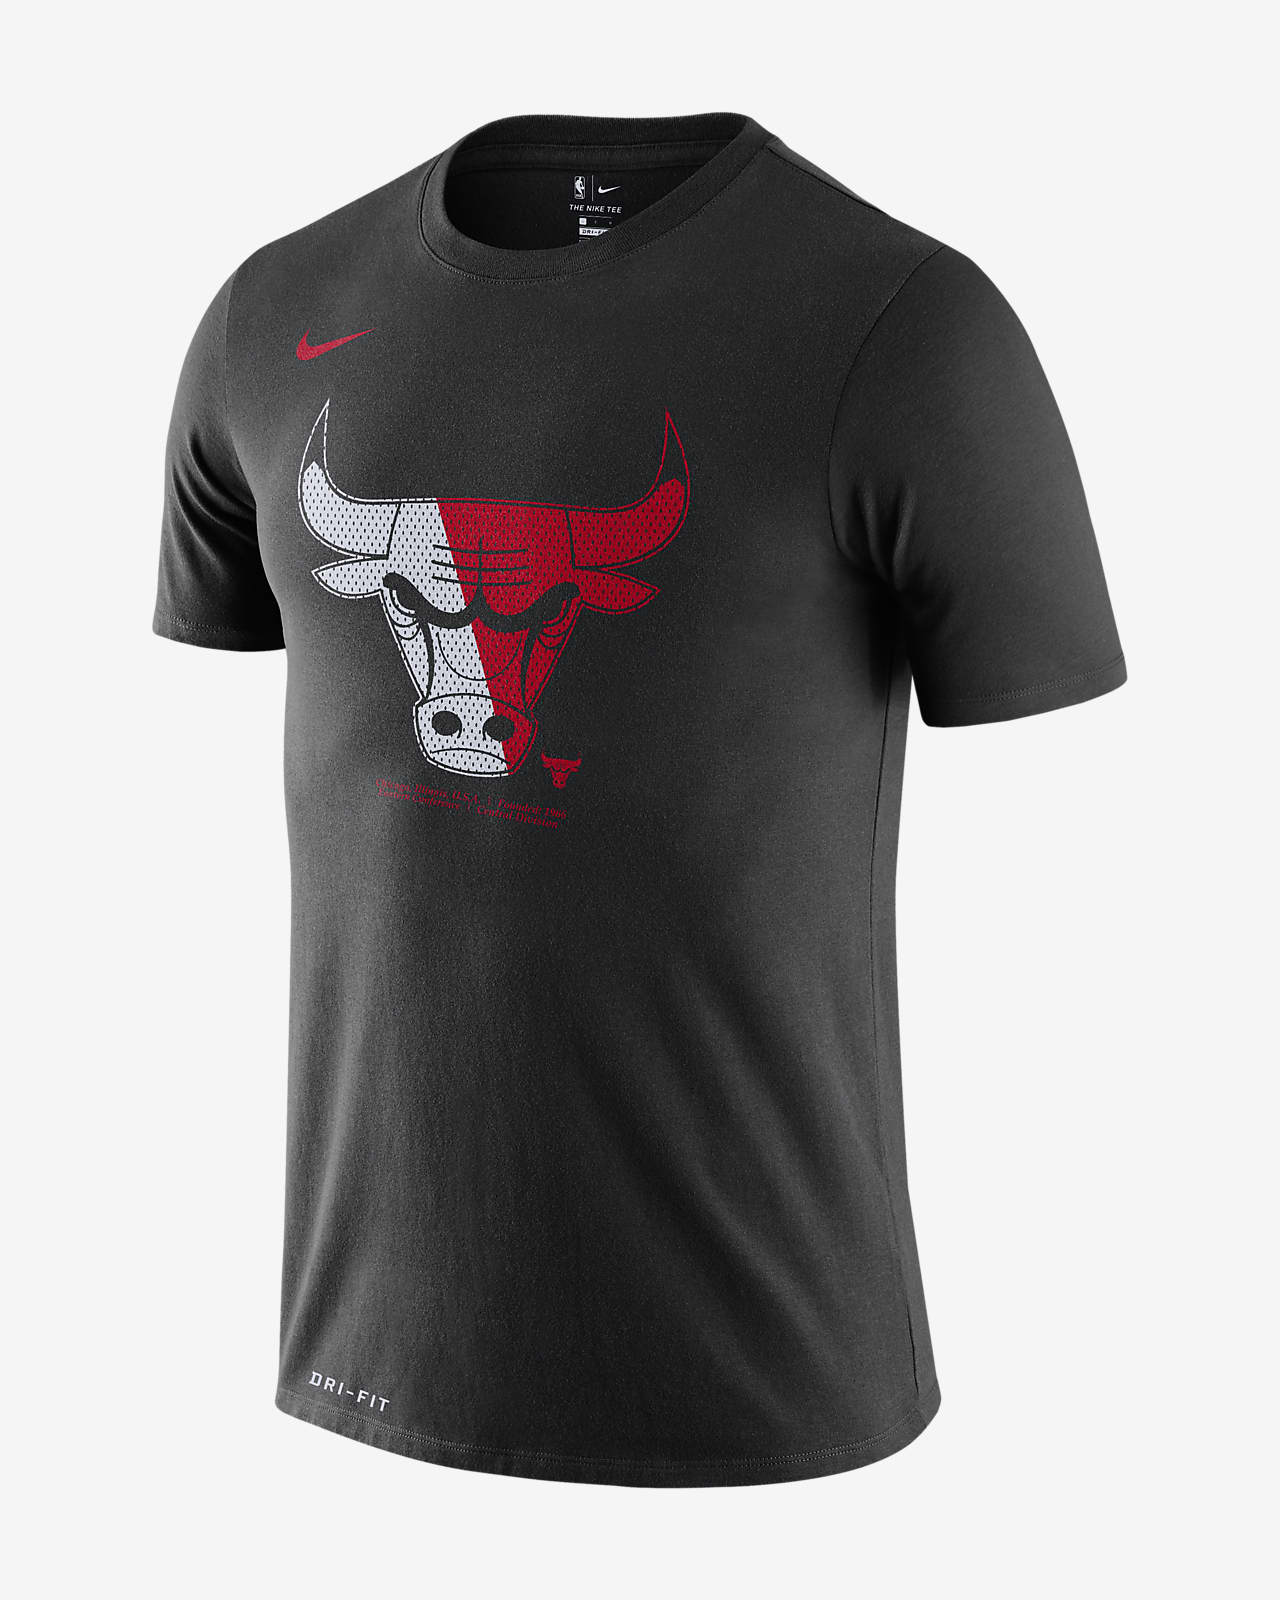 bulls shirt